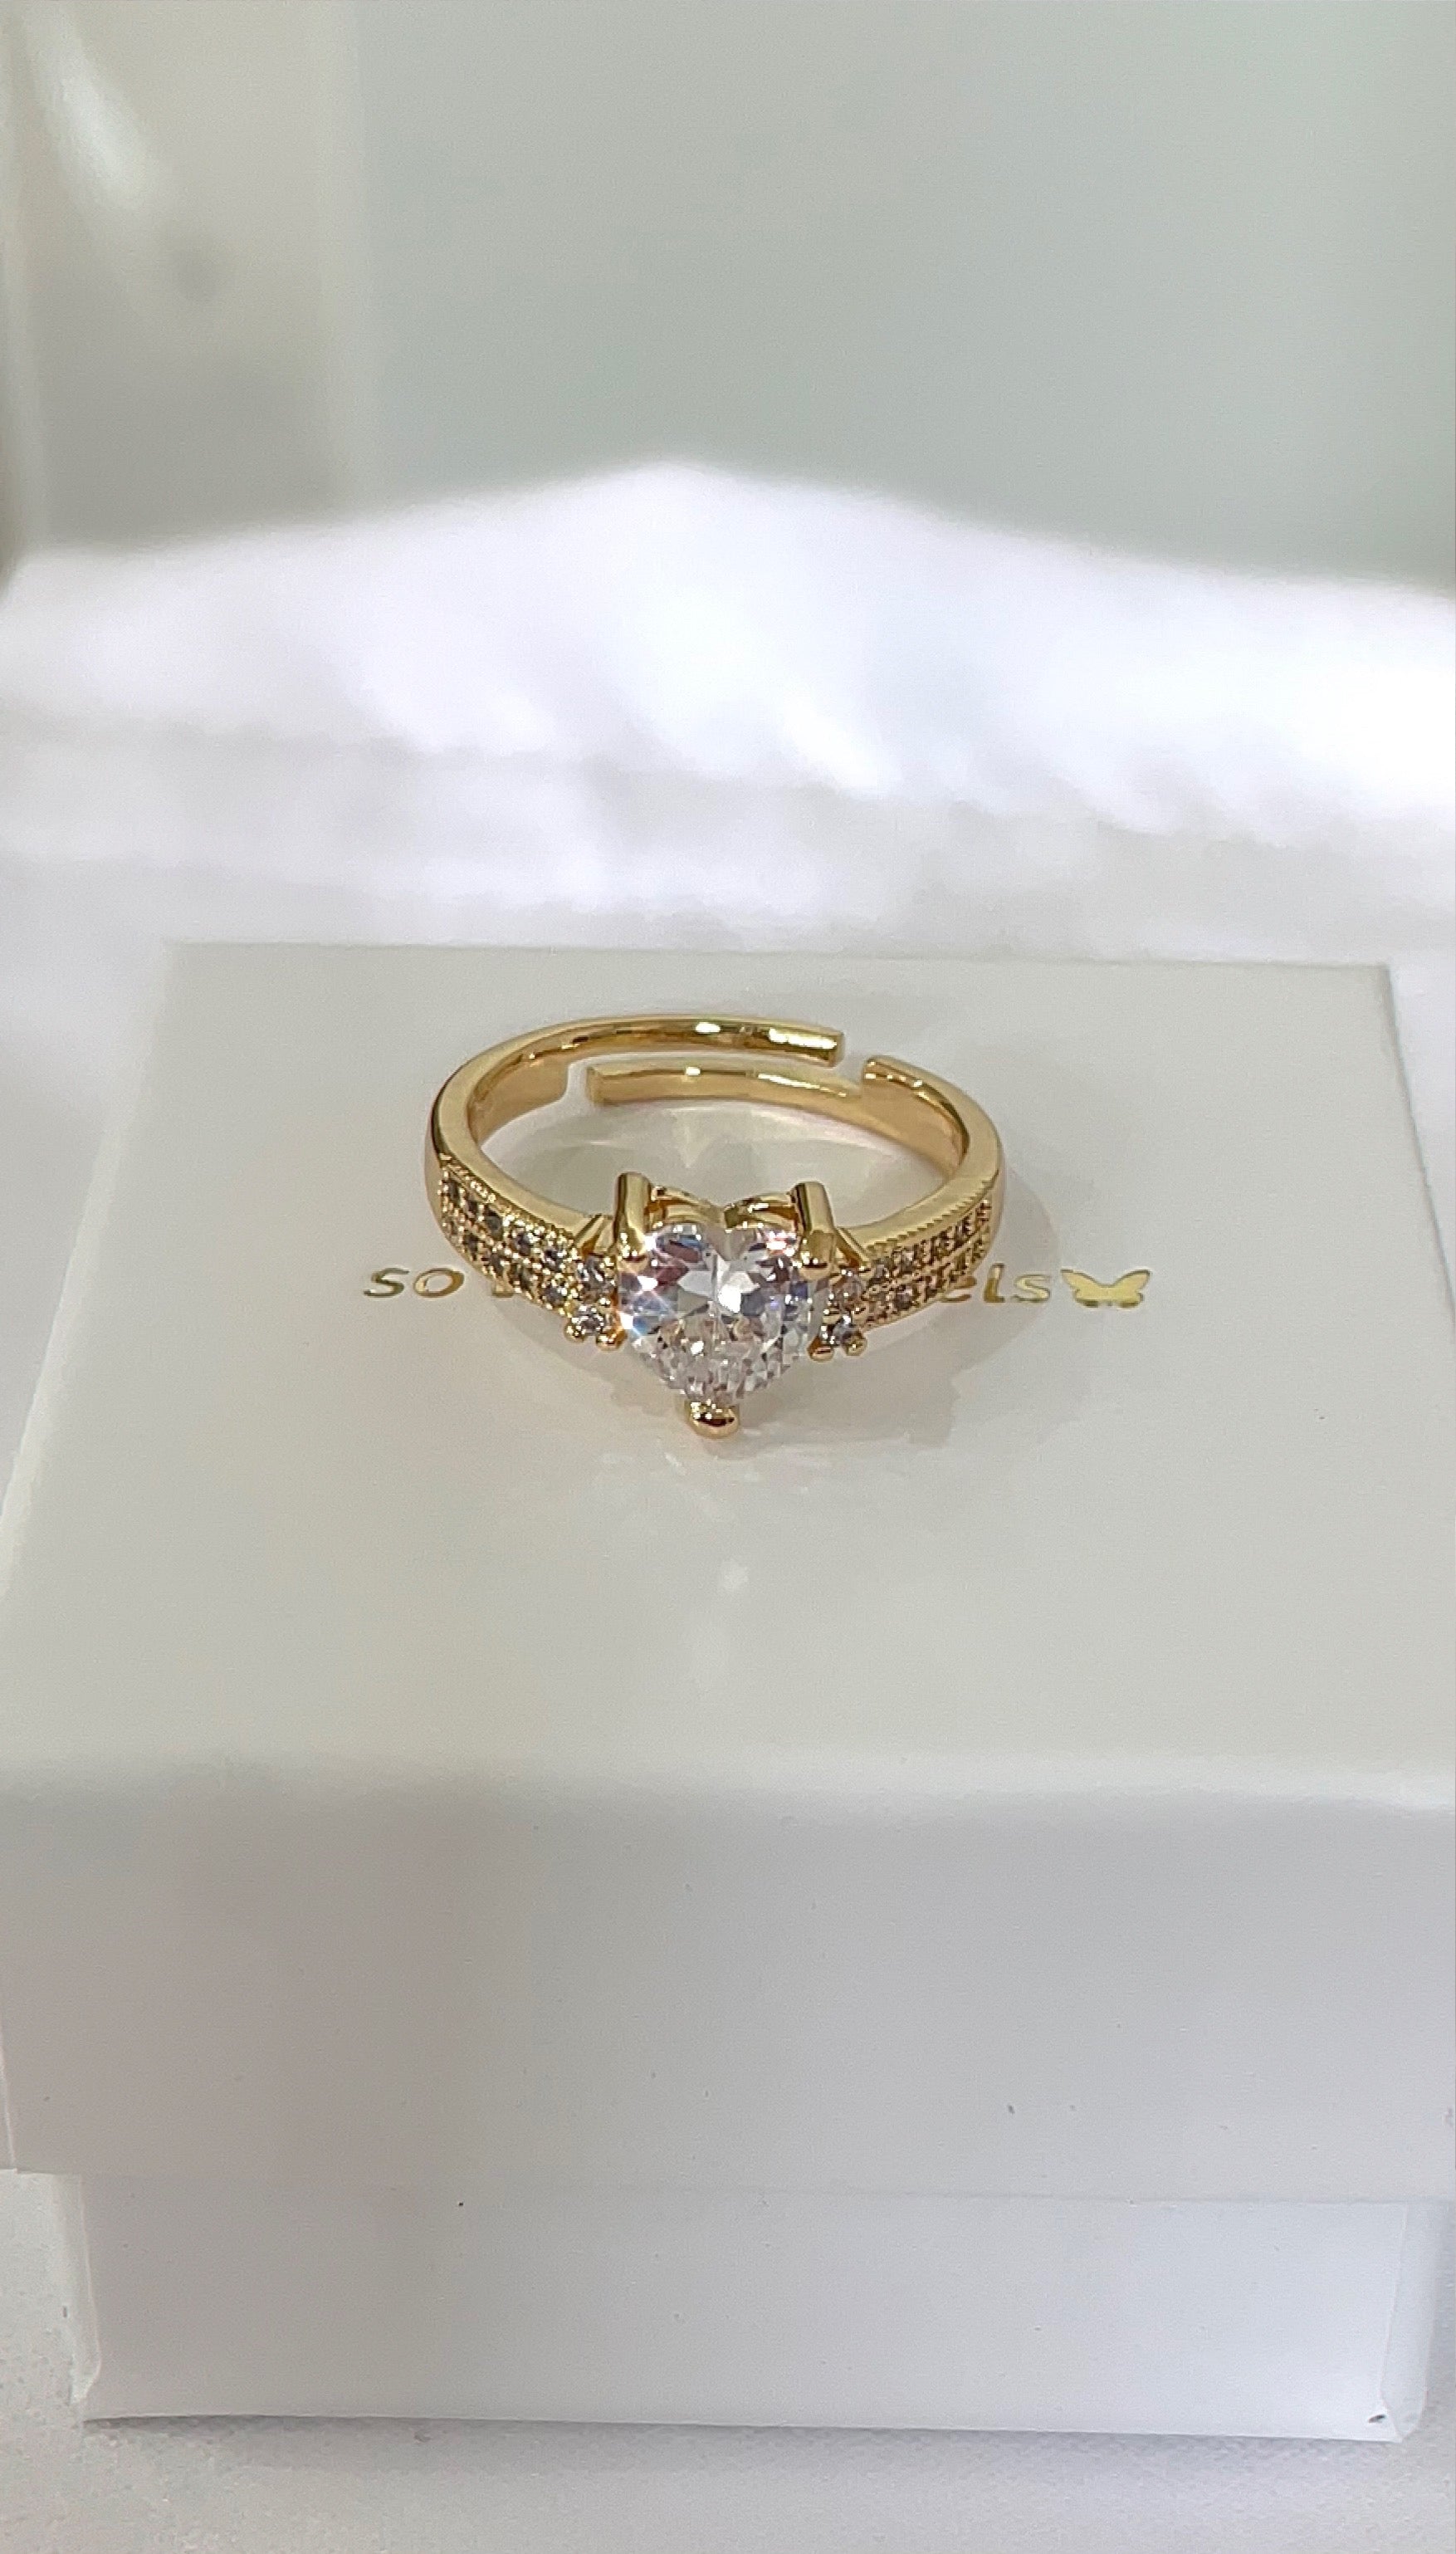 “promise” 24k gold filled heart adjustable ring